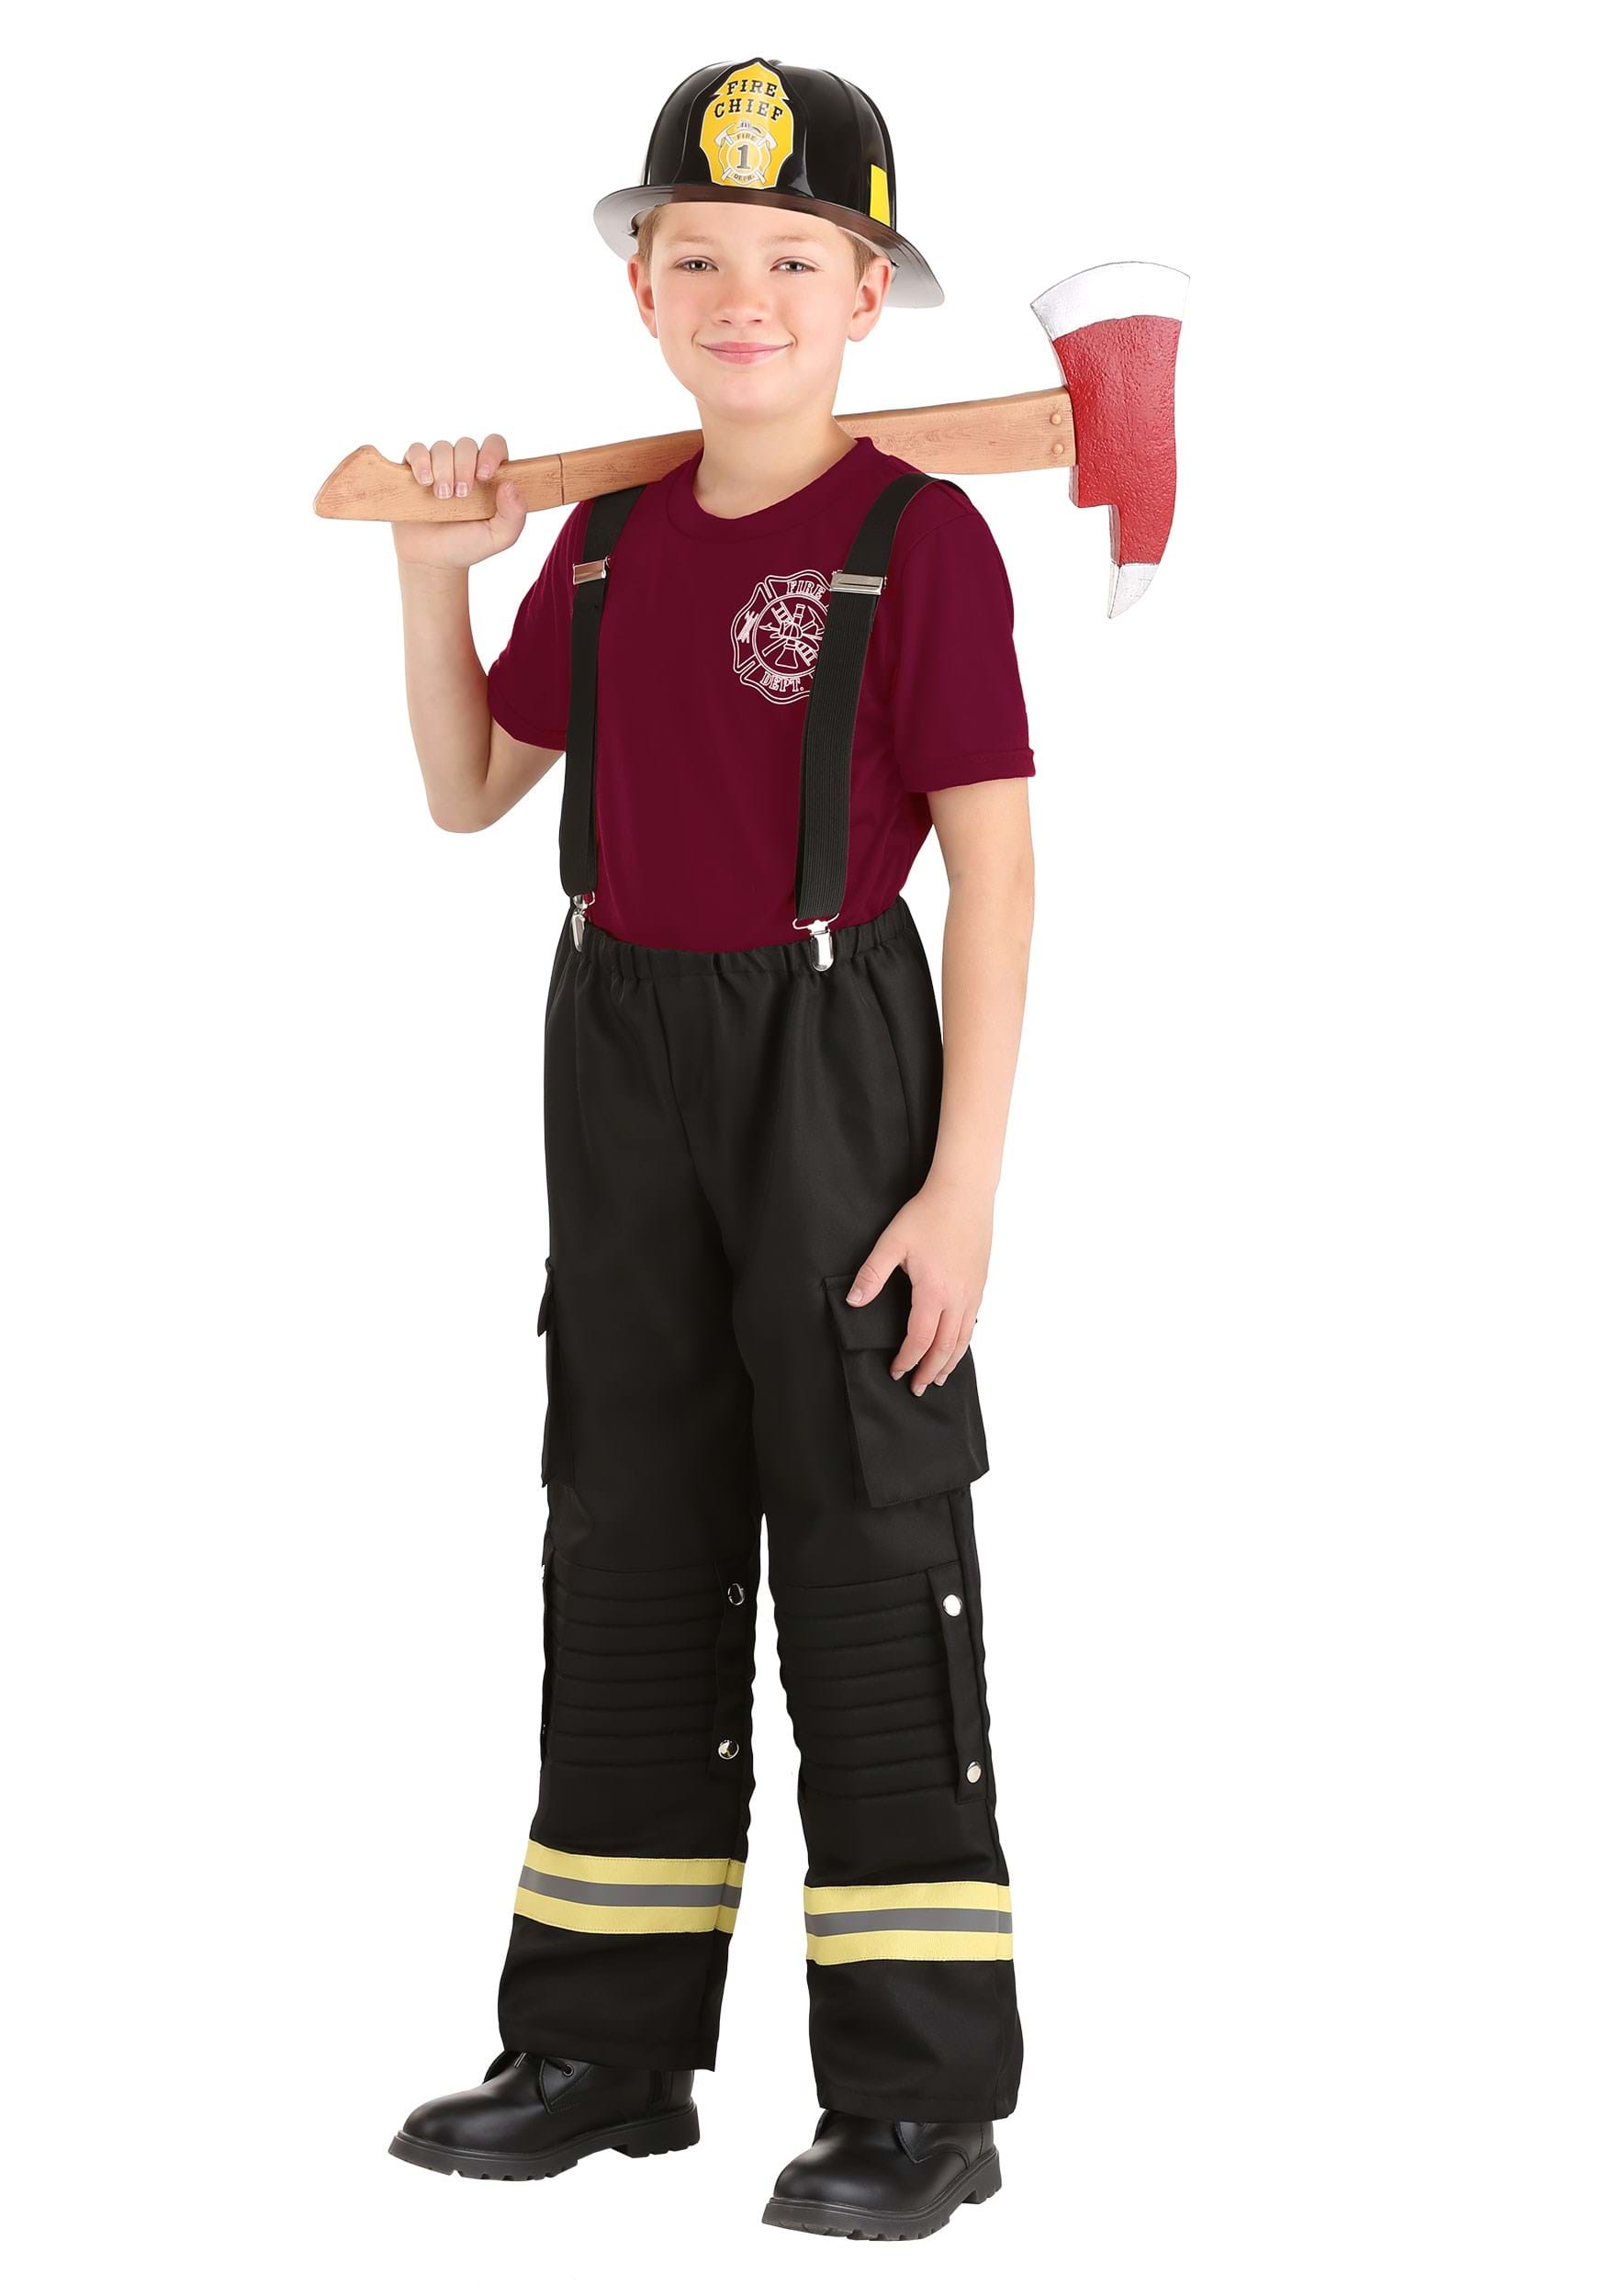 Adult Child Fire Chief Firefighter Fireman Helmet with Visor Costume